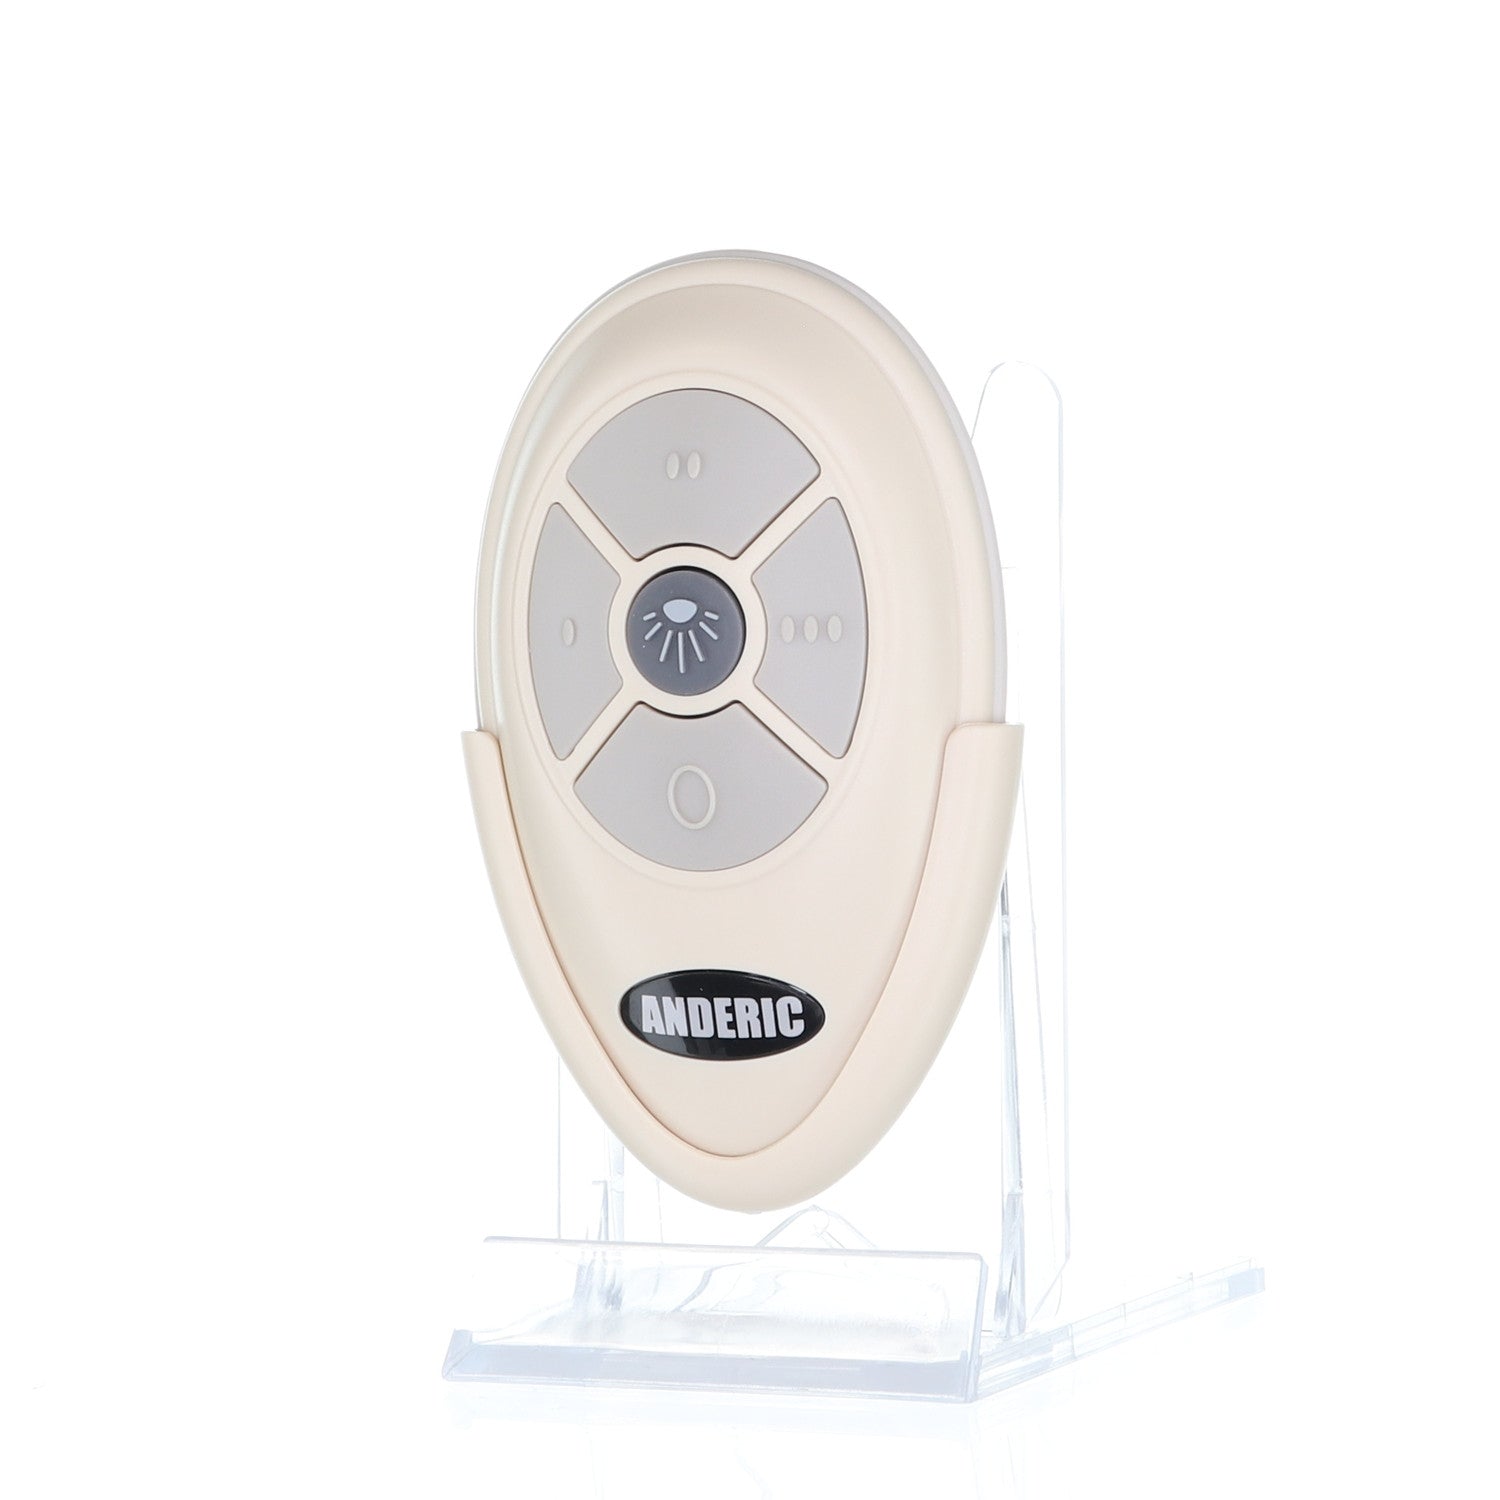 RRTX007 (A25-TX007) Remote Control for Harbor Breeze® Ceiling Fans